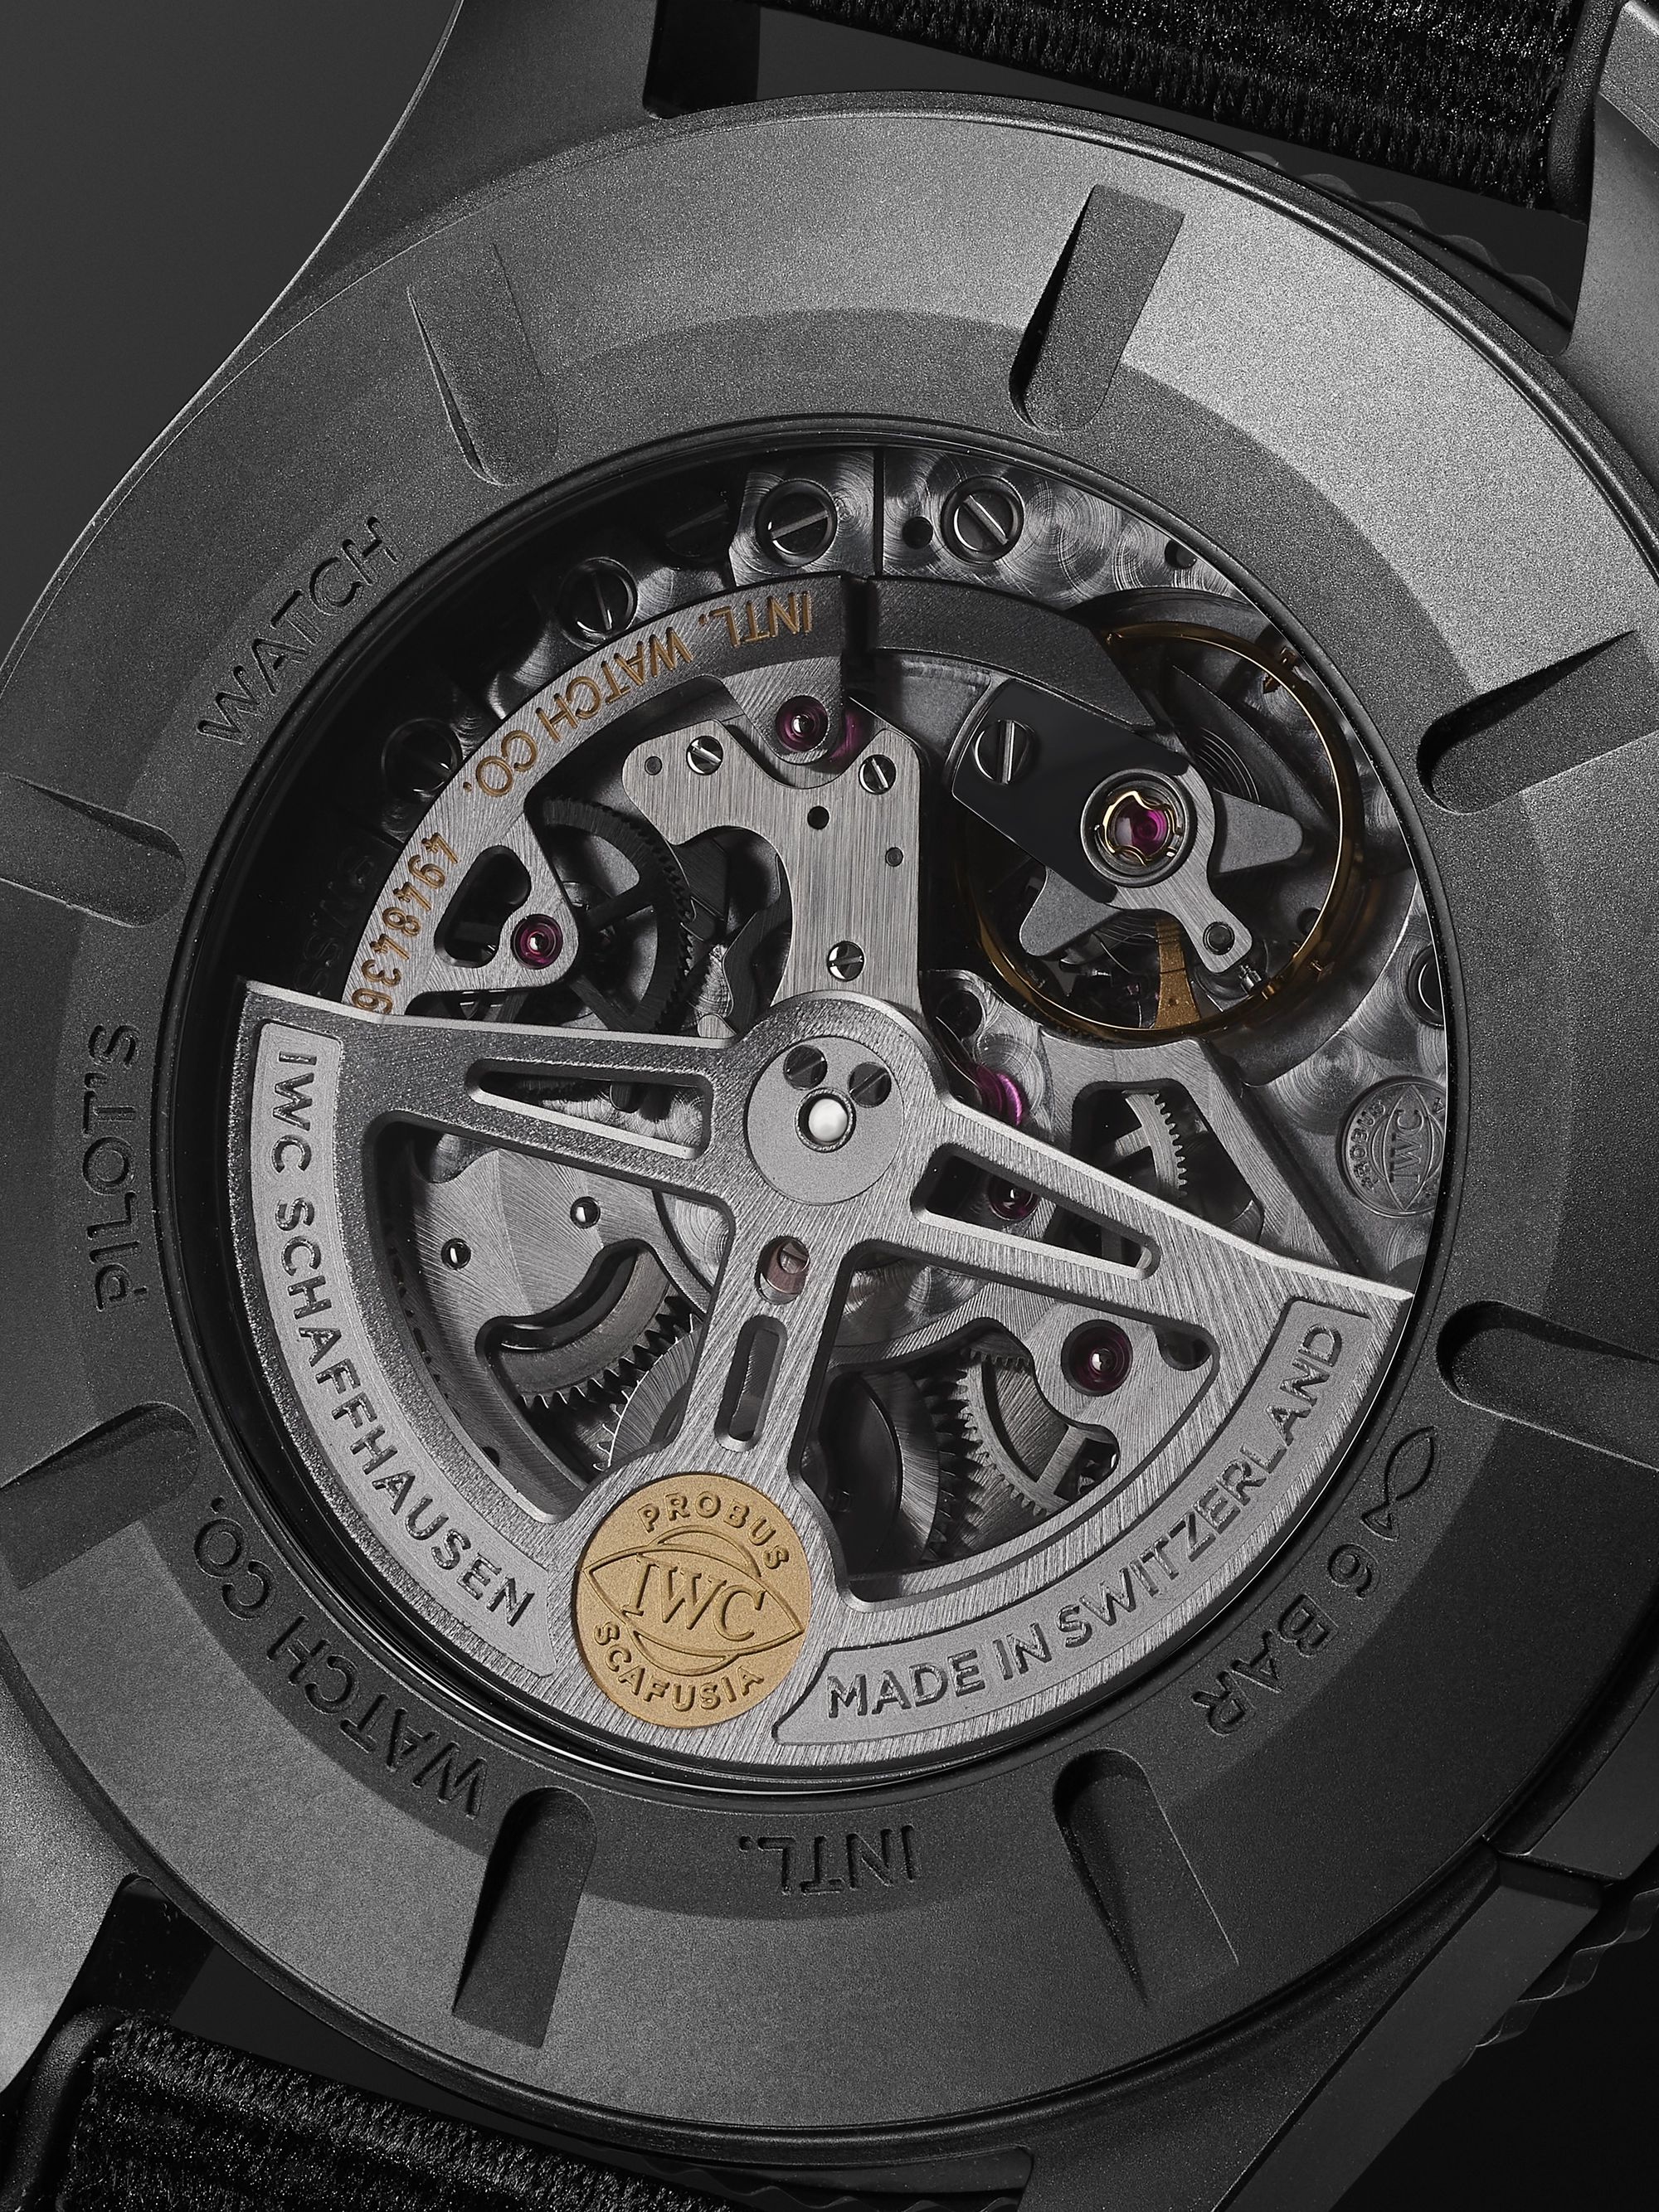 IWC SCHAFFHAUSEN Pilot's Watch Timezoner TOP GUN Limited Edition Automatic Ceratanium and Webbing Watch, Ref. No. IW395505